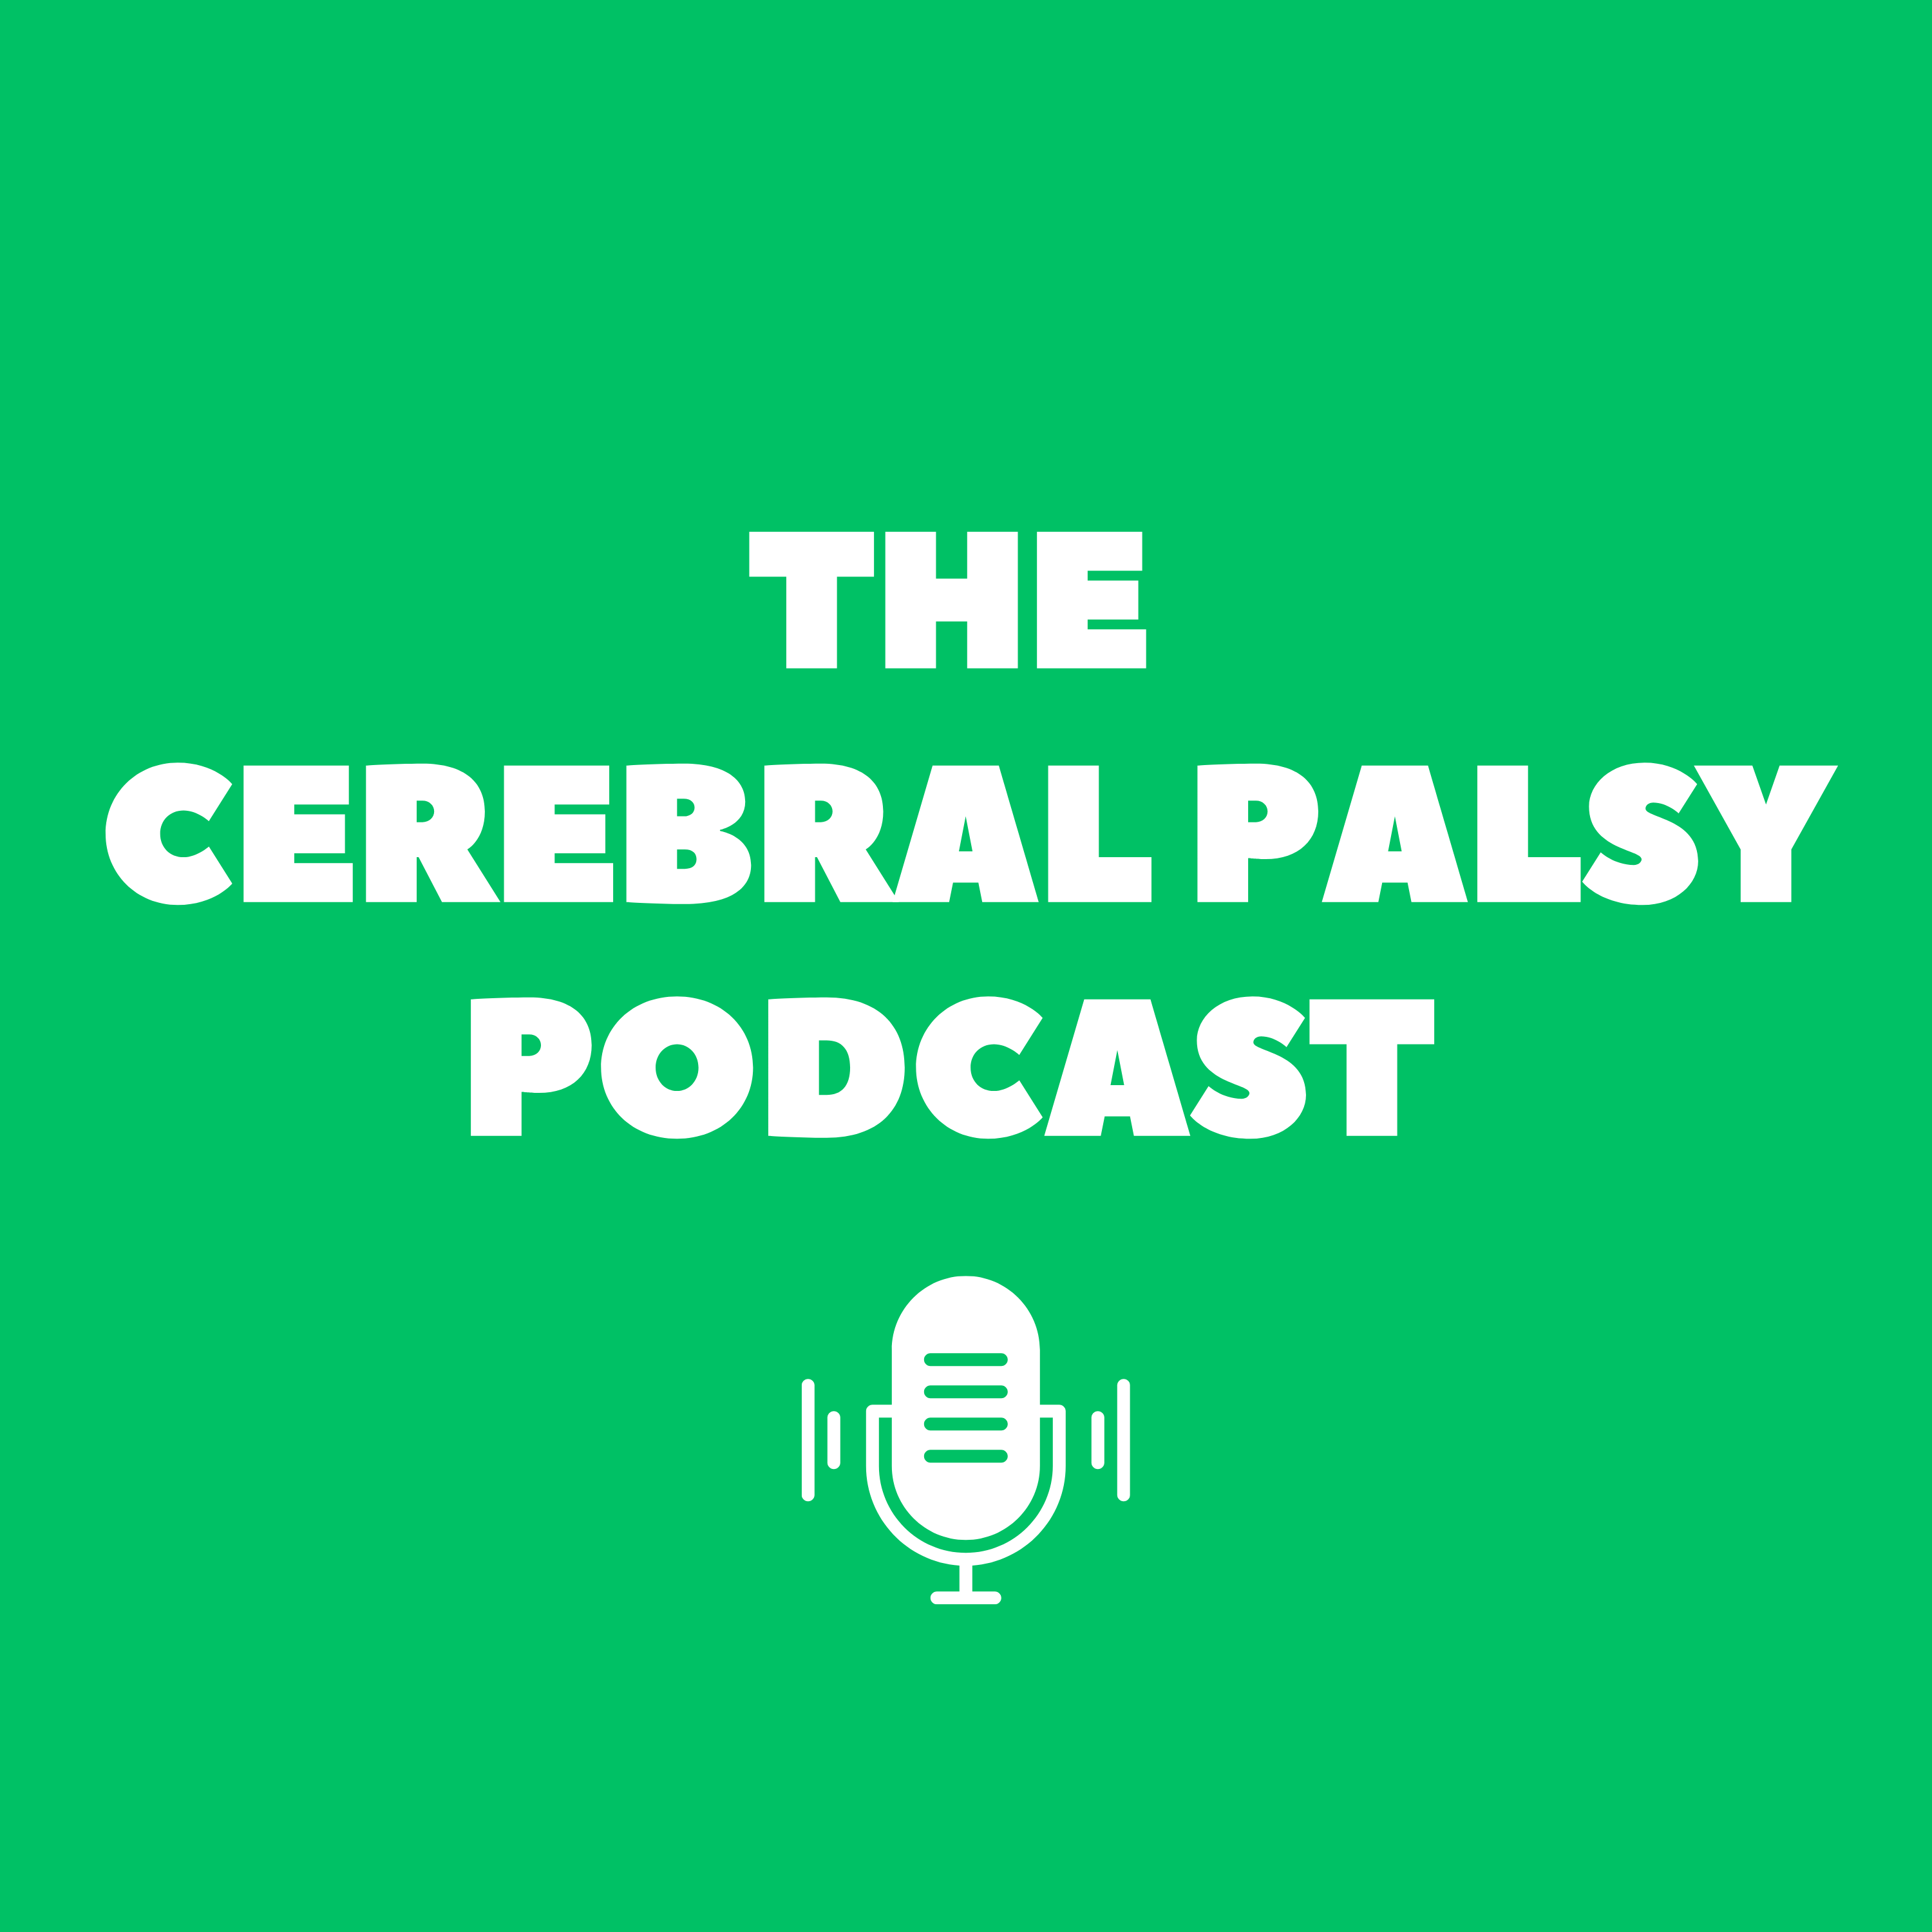 The Cerebral Palsy Podcast